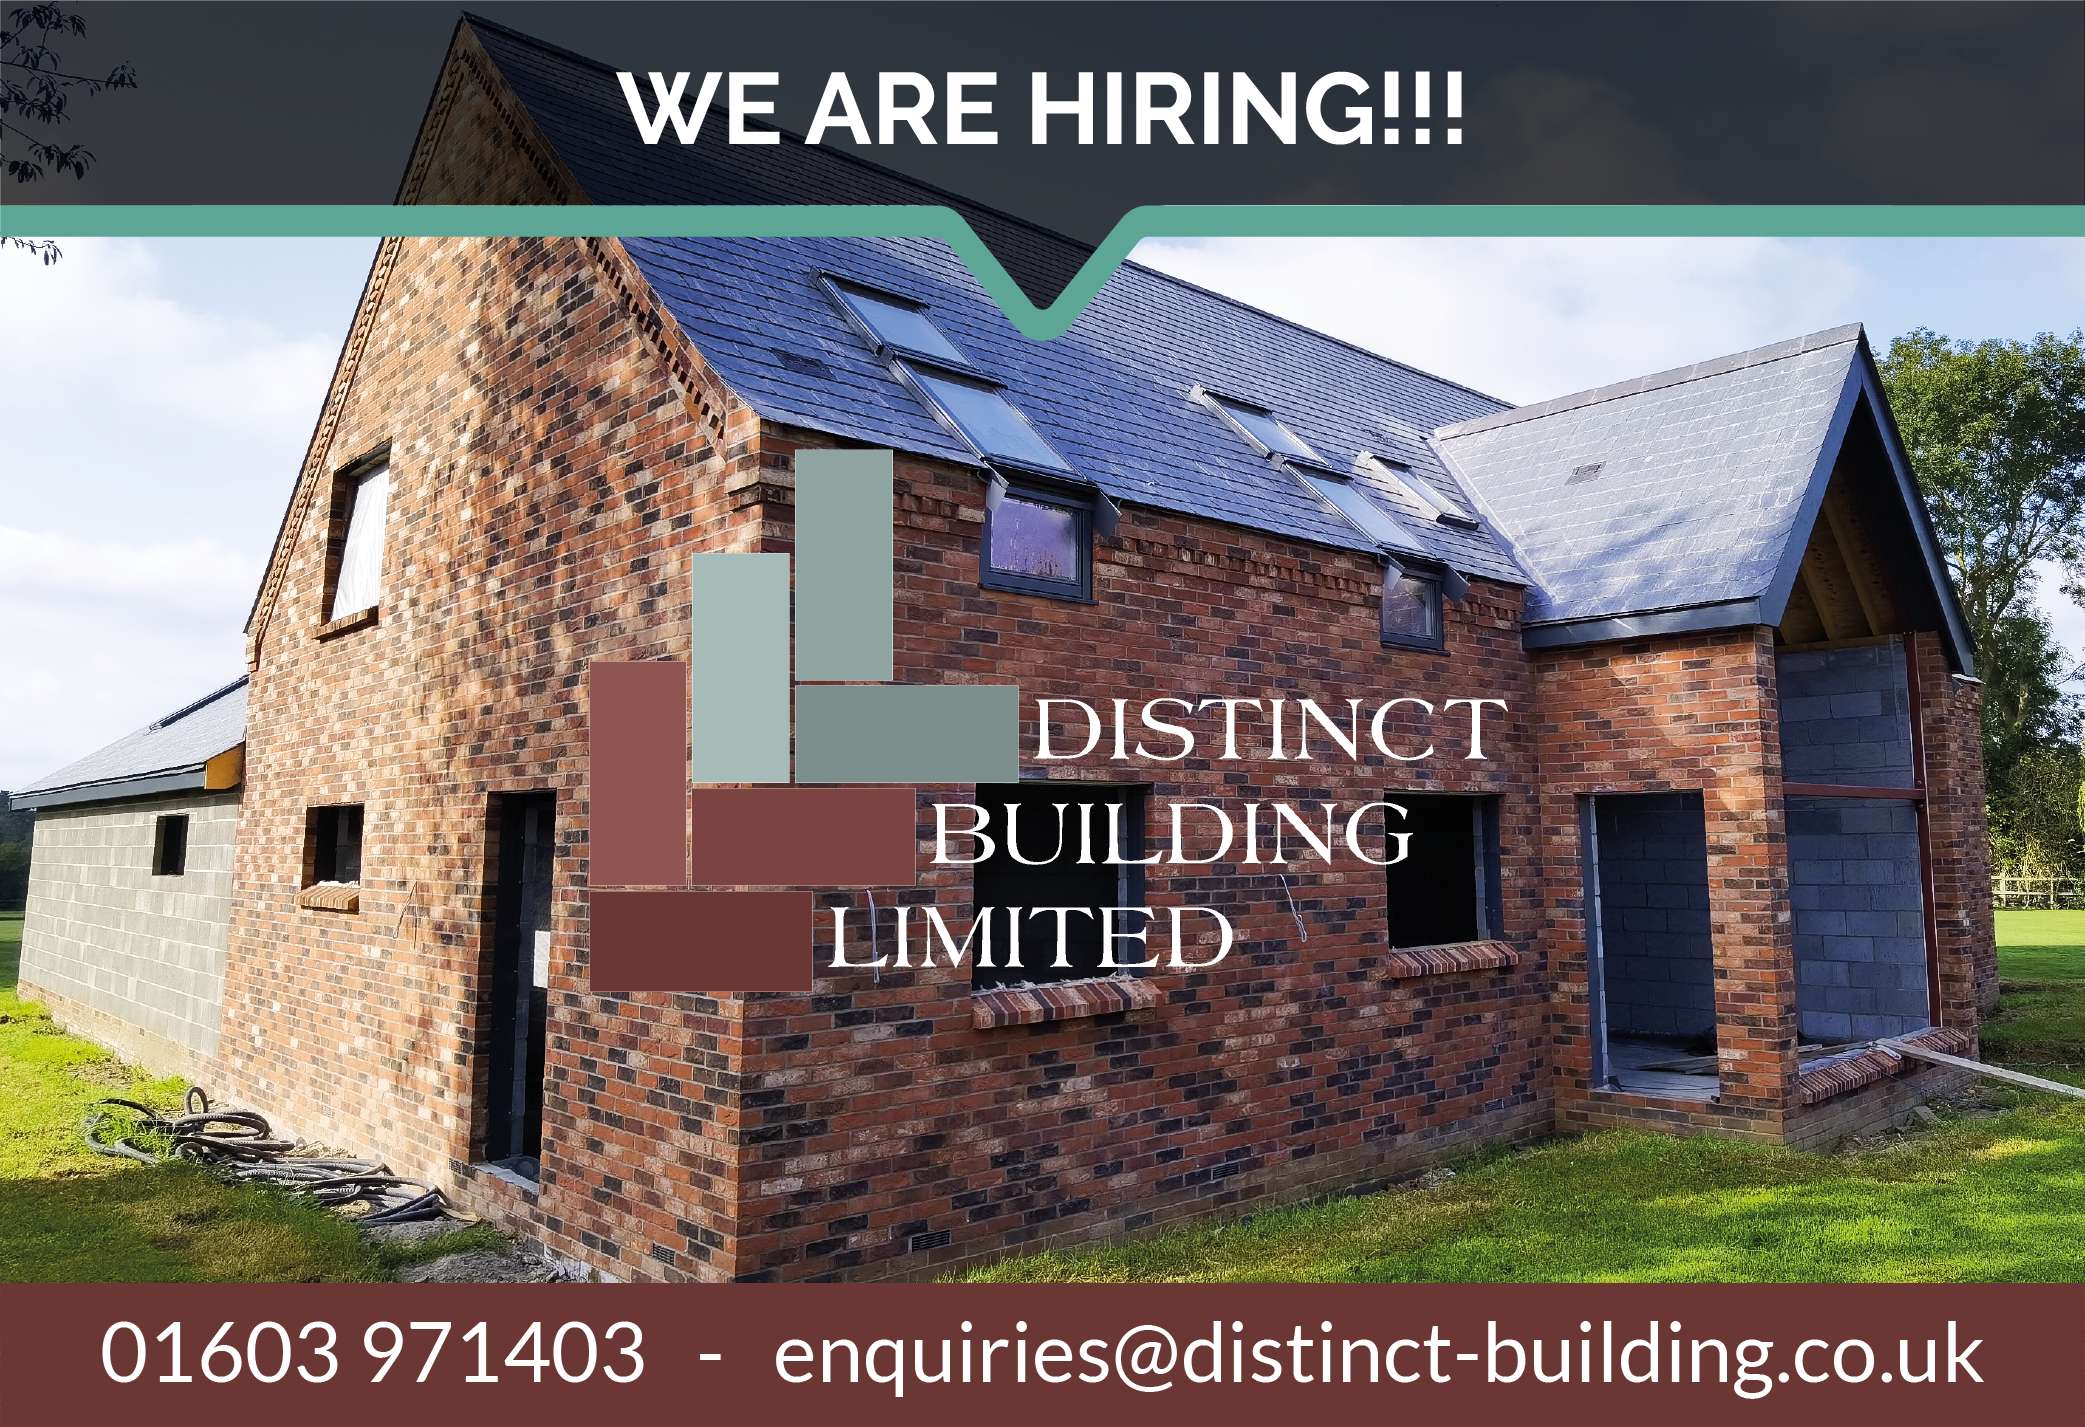 Distinct Building Limited